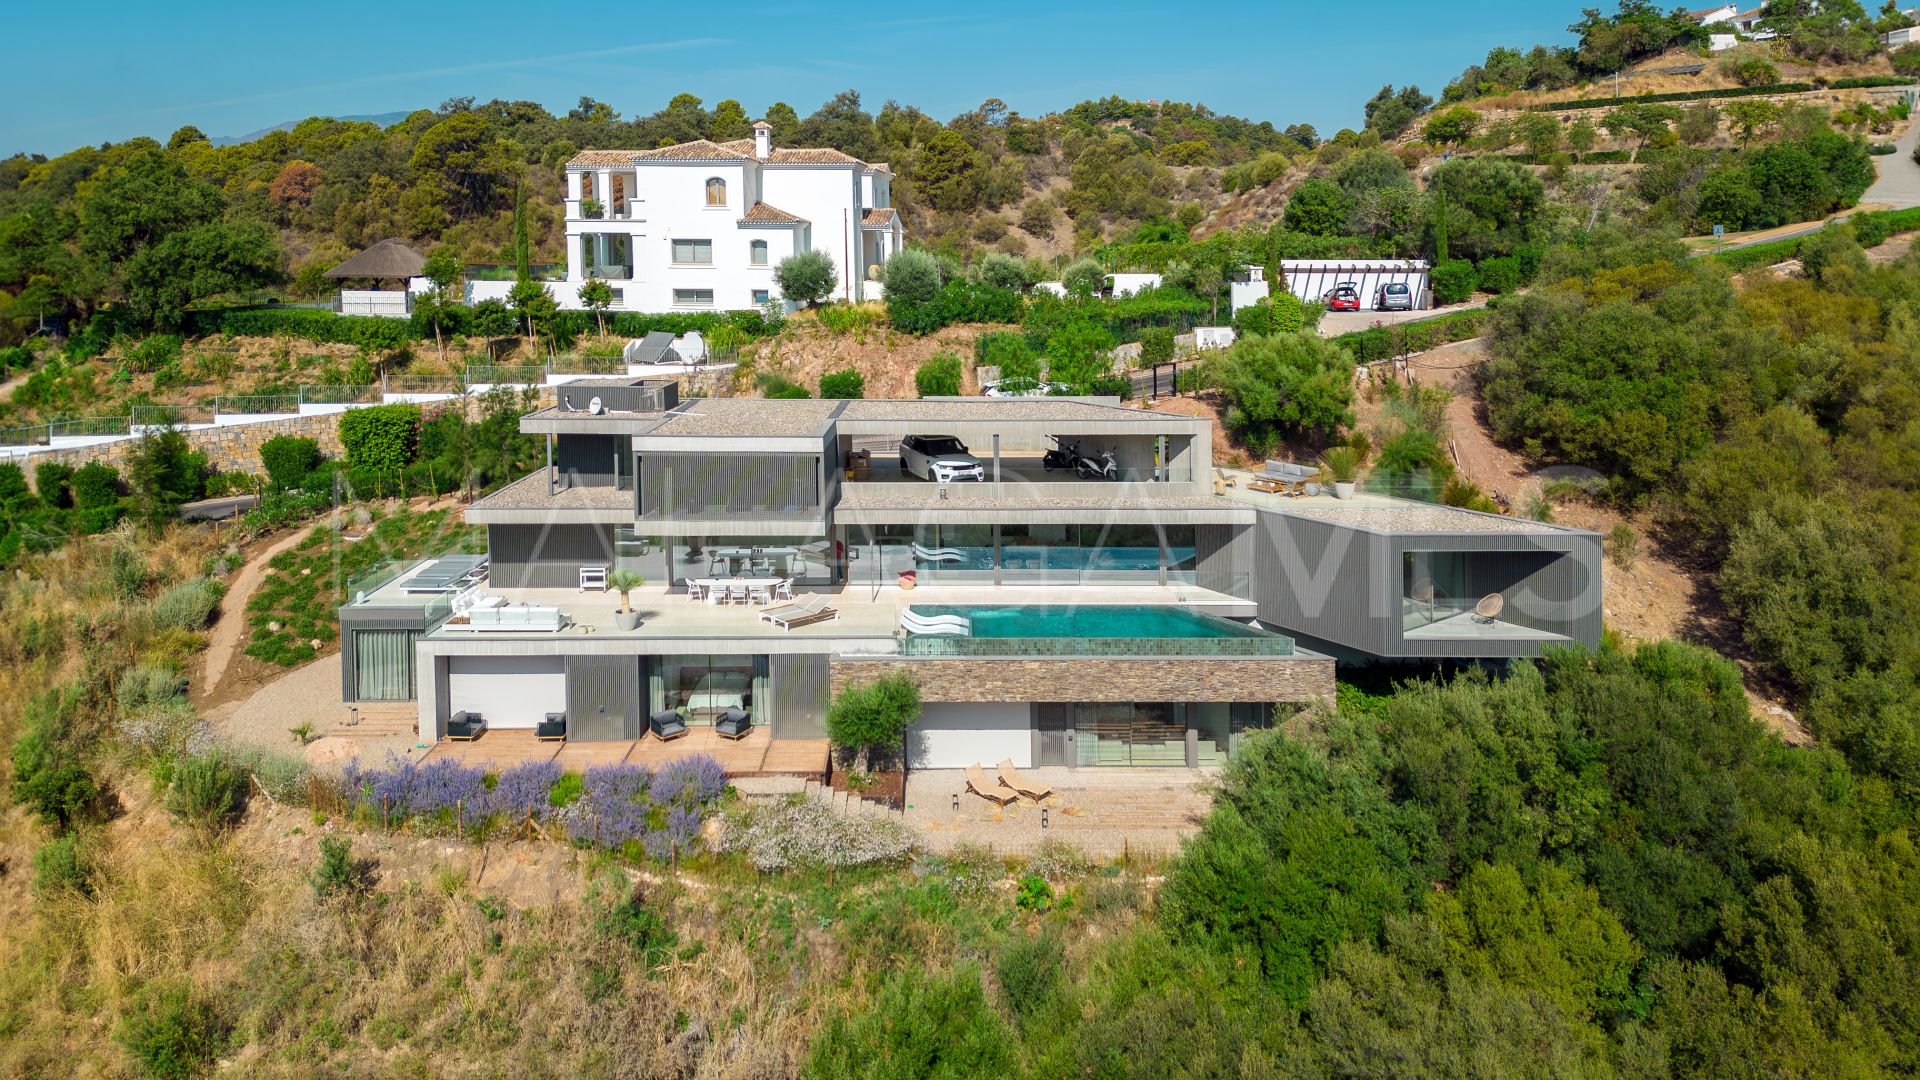 6 bedrooms villa in Marbella Club Golf Resort for sale